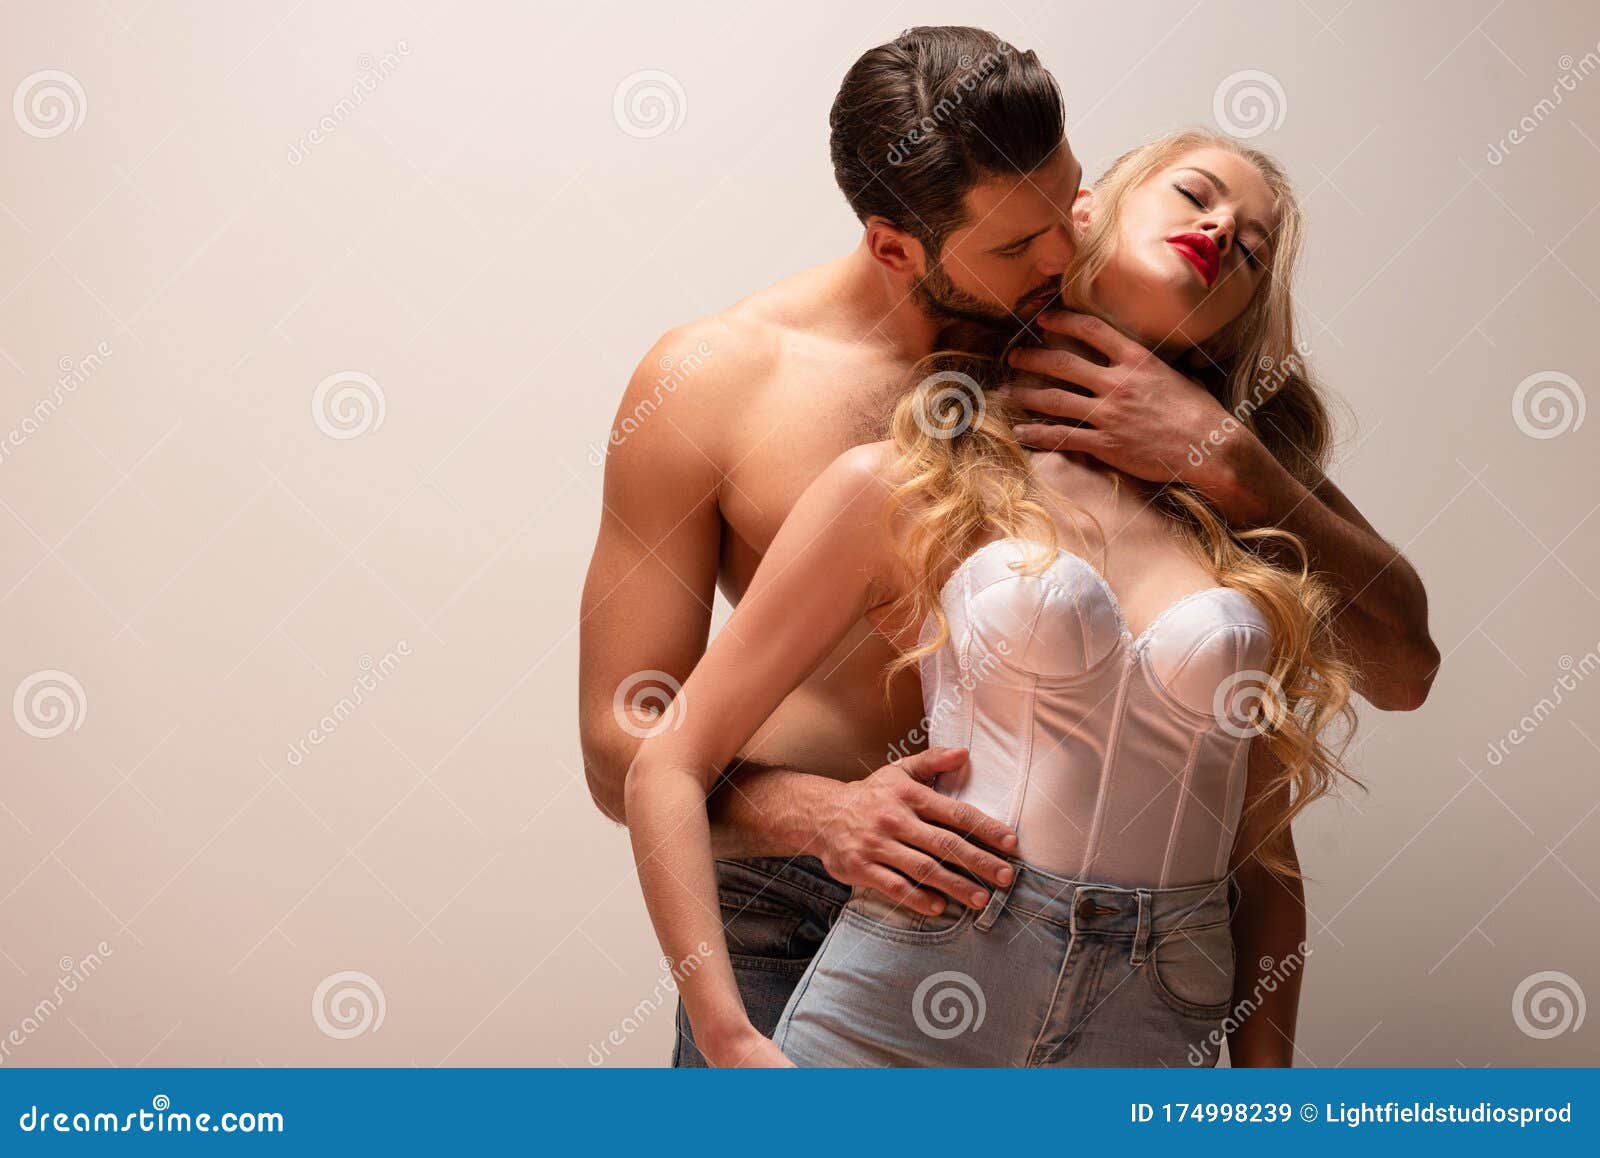 aleli flores amburgo recommends hot women kissing men pic